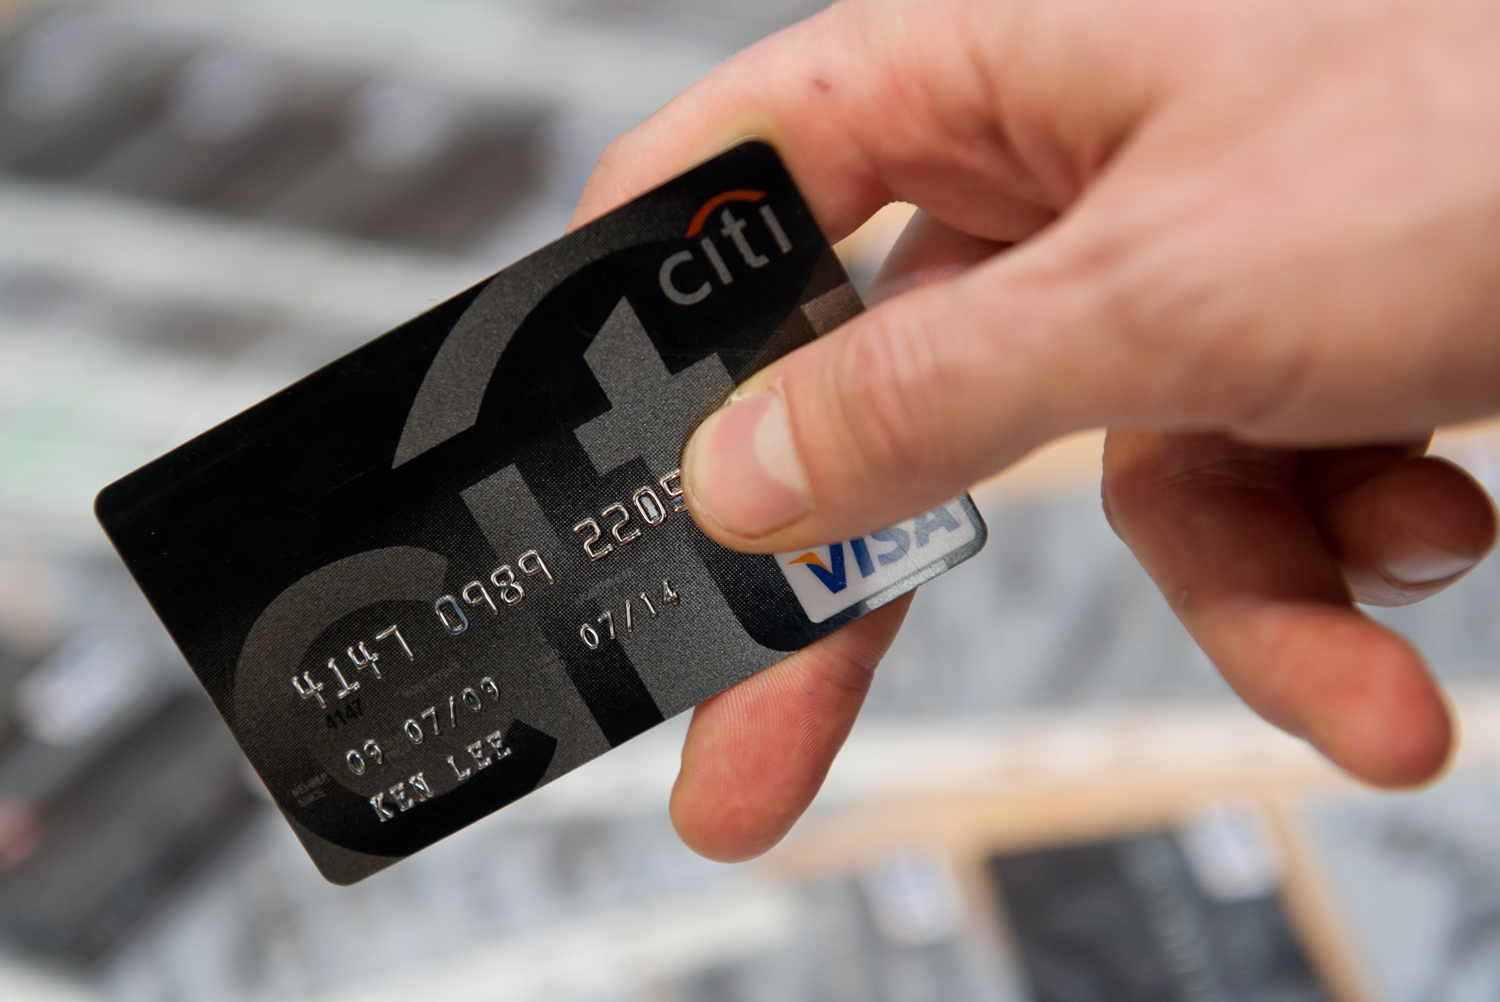 Hane arbejde Andre steder From online hacks to plastic fakes: The strange life of a stolen credit card